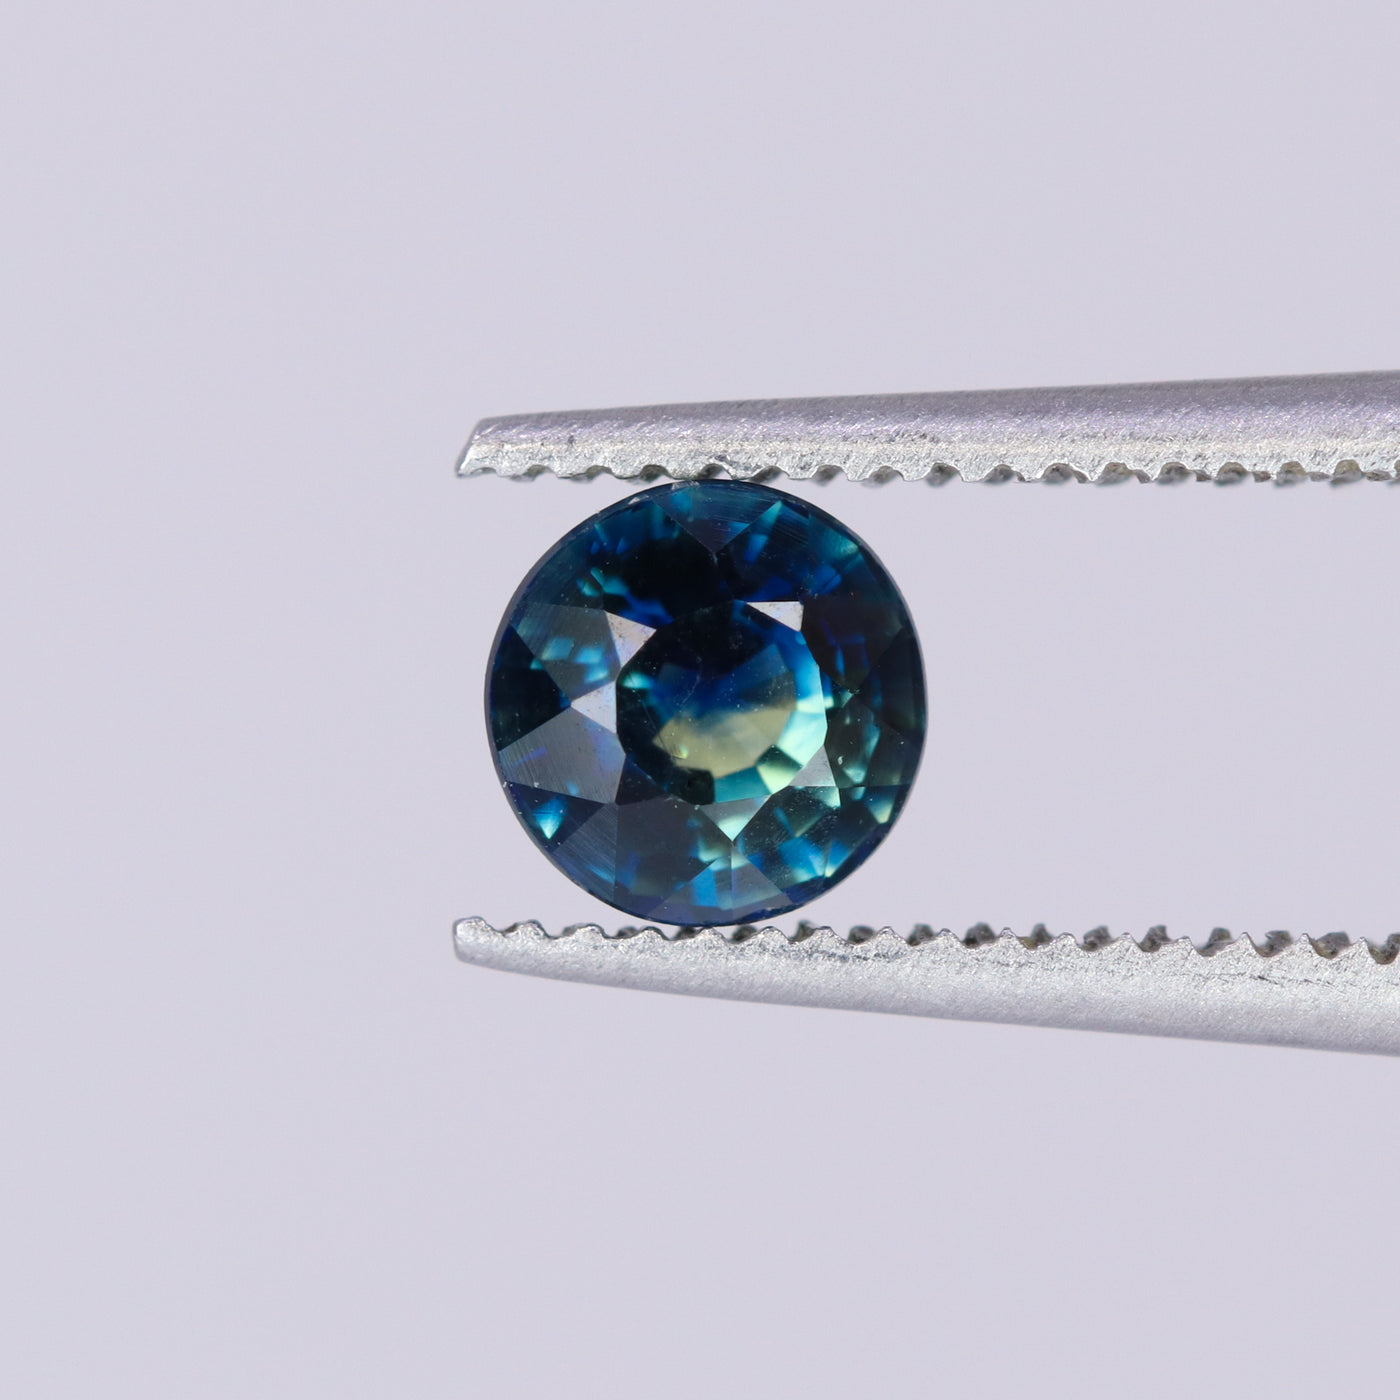 Teal Sapphire | 0.68ct Round Brilliant Cut, Loose Gemstone